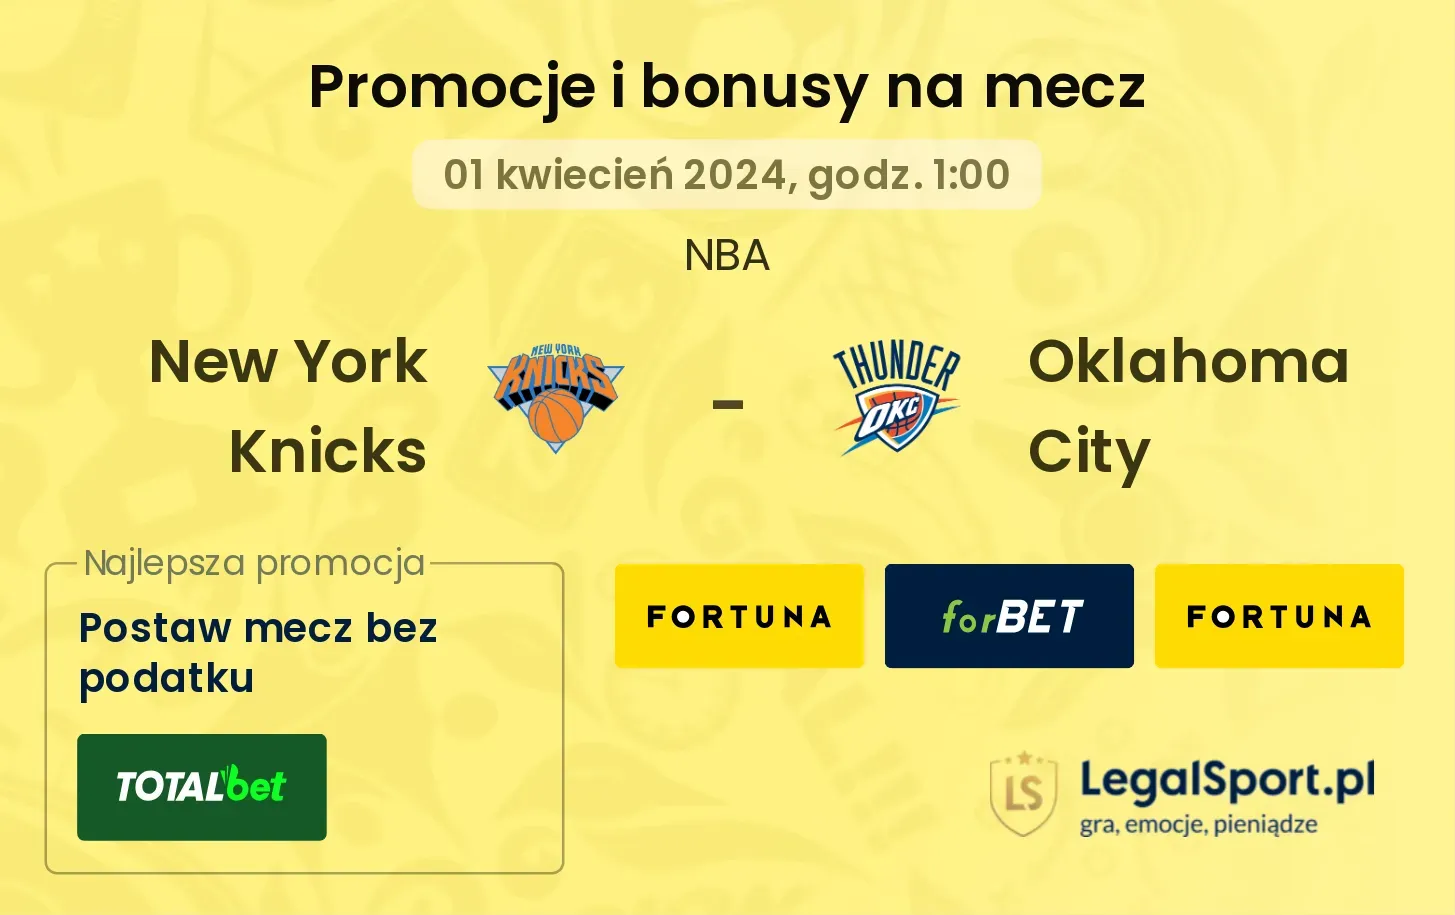 New York Knicks - Oklahoma City promocje bonusy na mecz